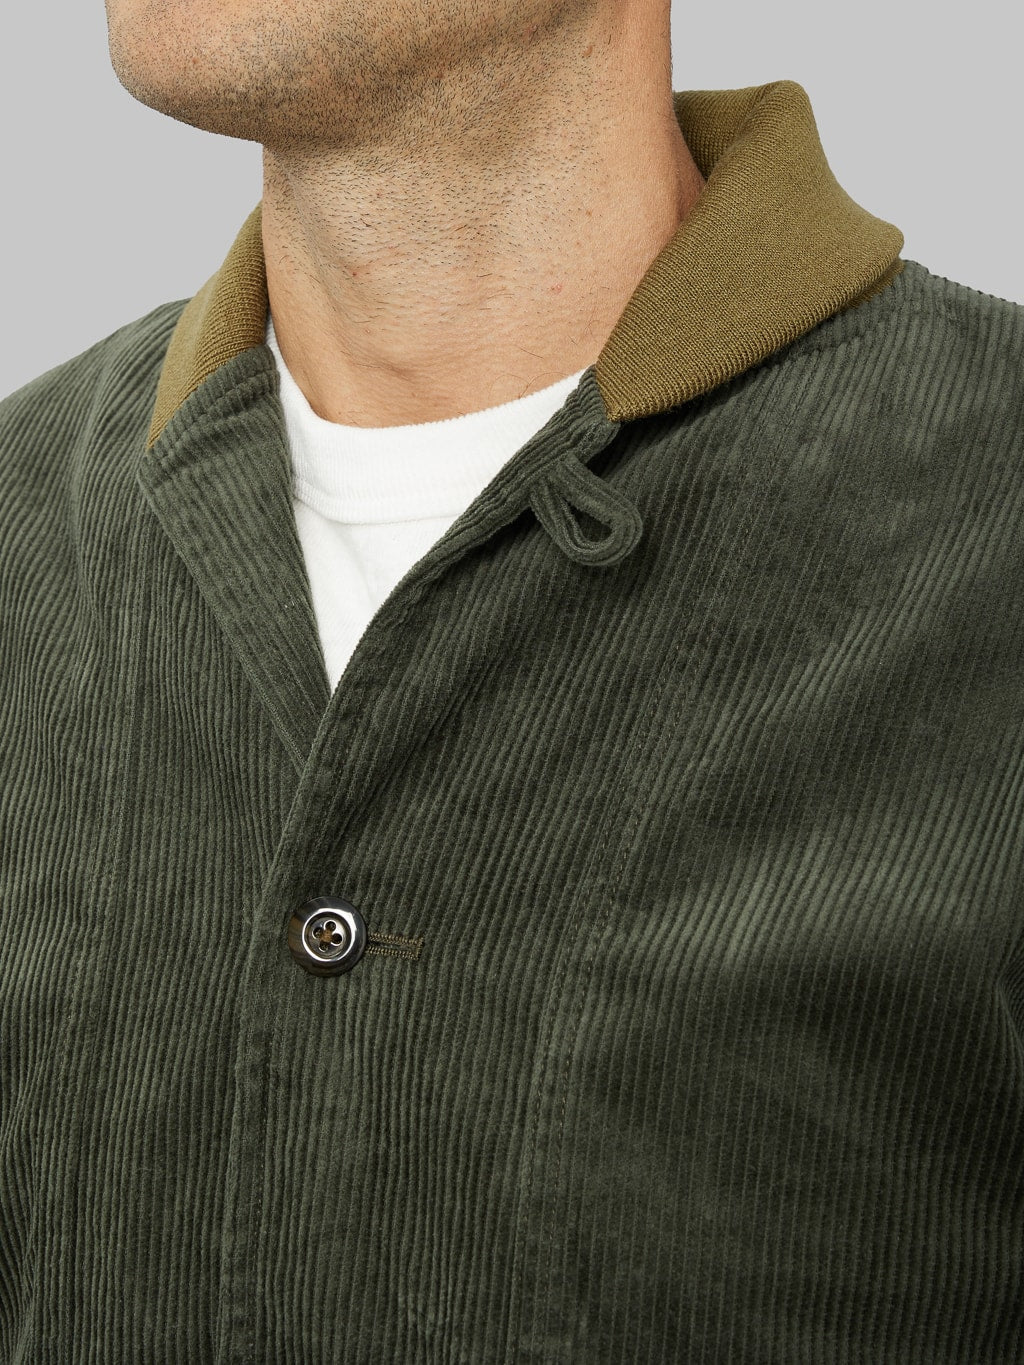 Tanuki Sazanami Corduroy Bayberry Dyed Green Jacket  shawl collar